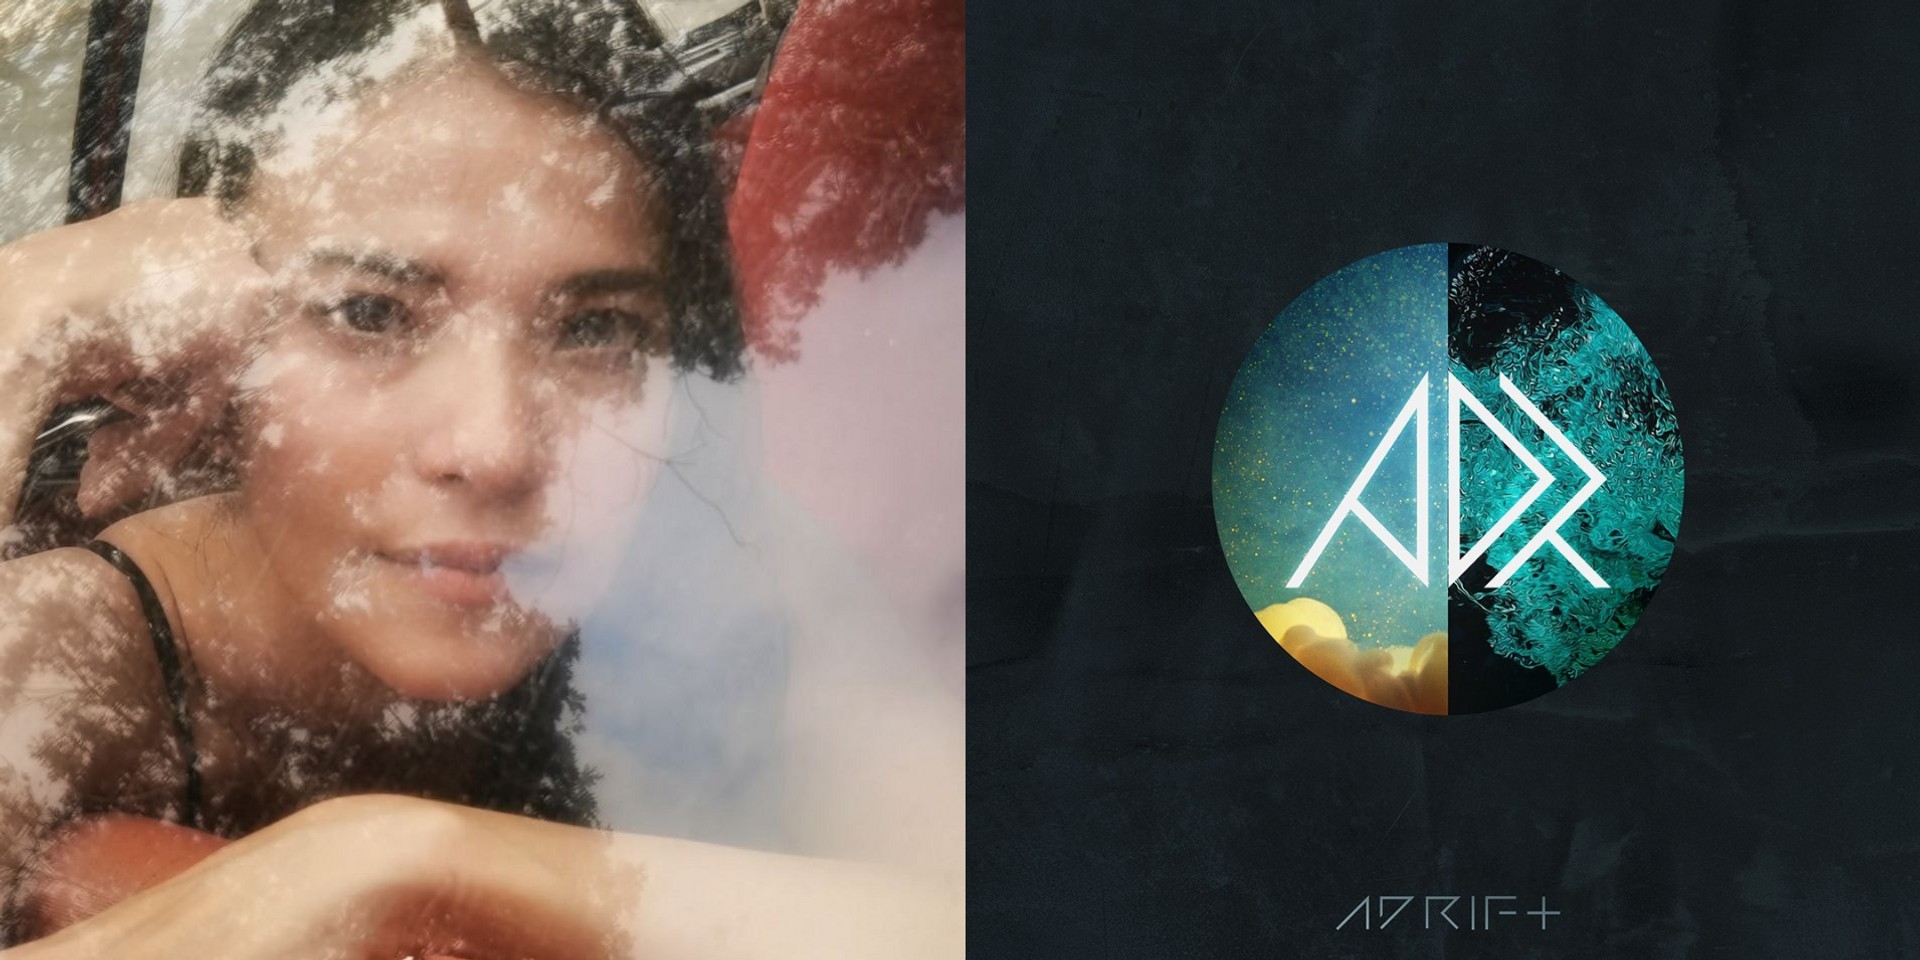 Alessandra De Rossi to release remastered version of debut album, 'Adrift'